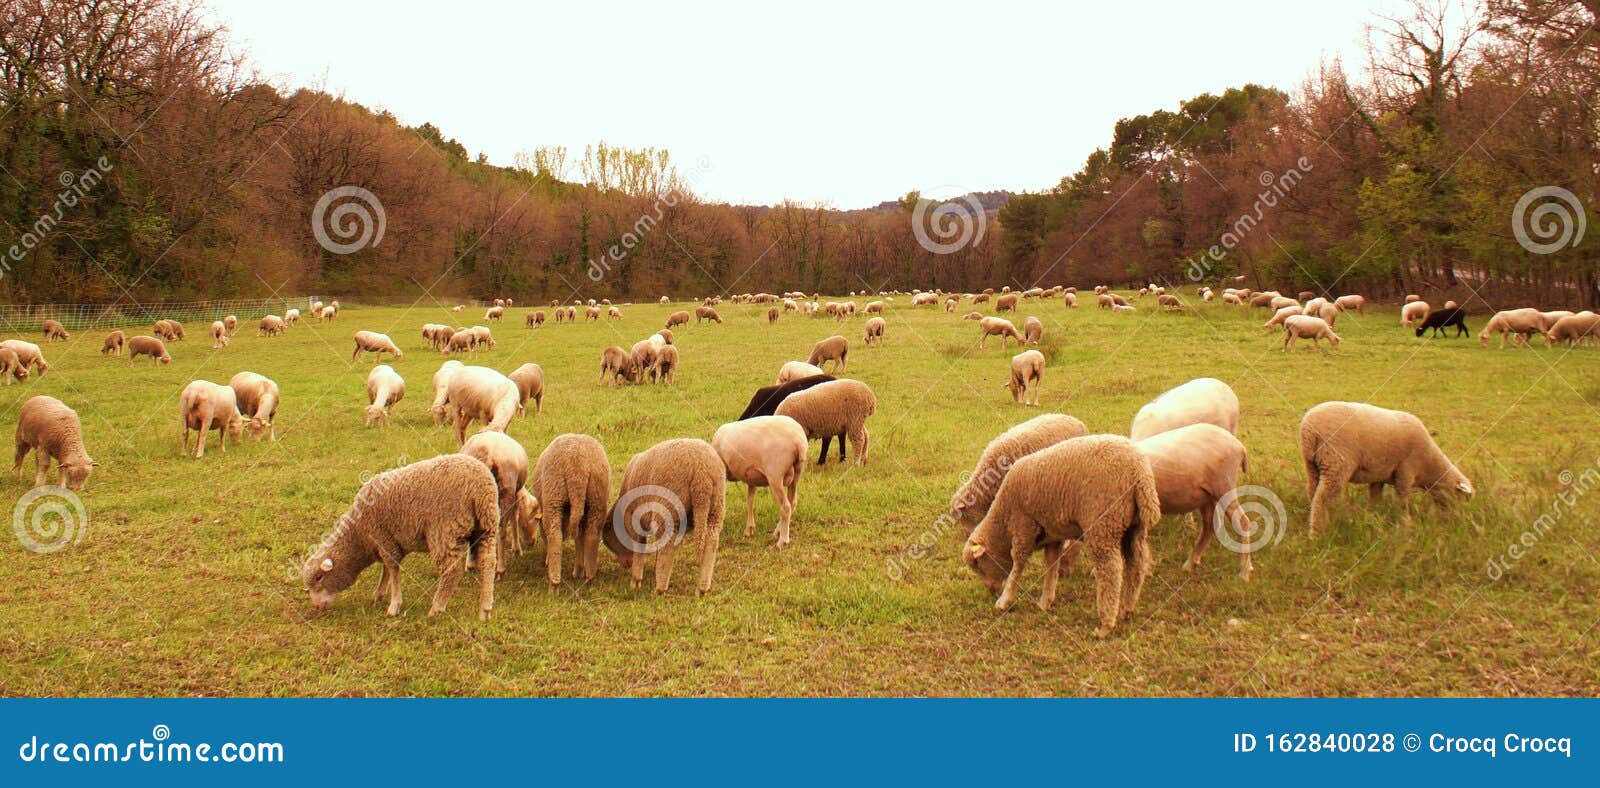 flock of sheeps in a meadow